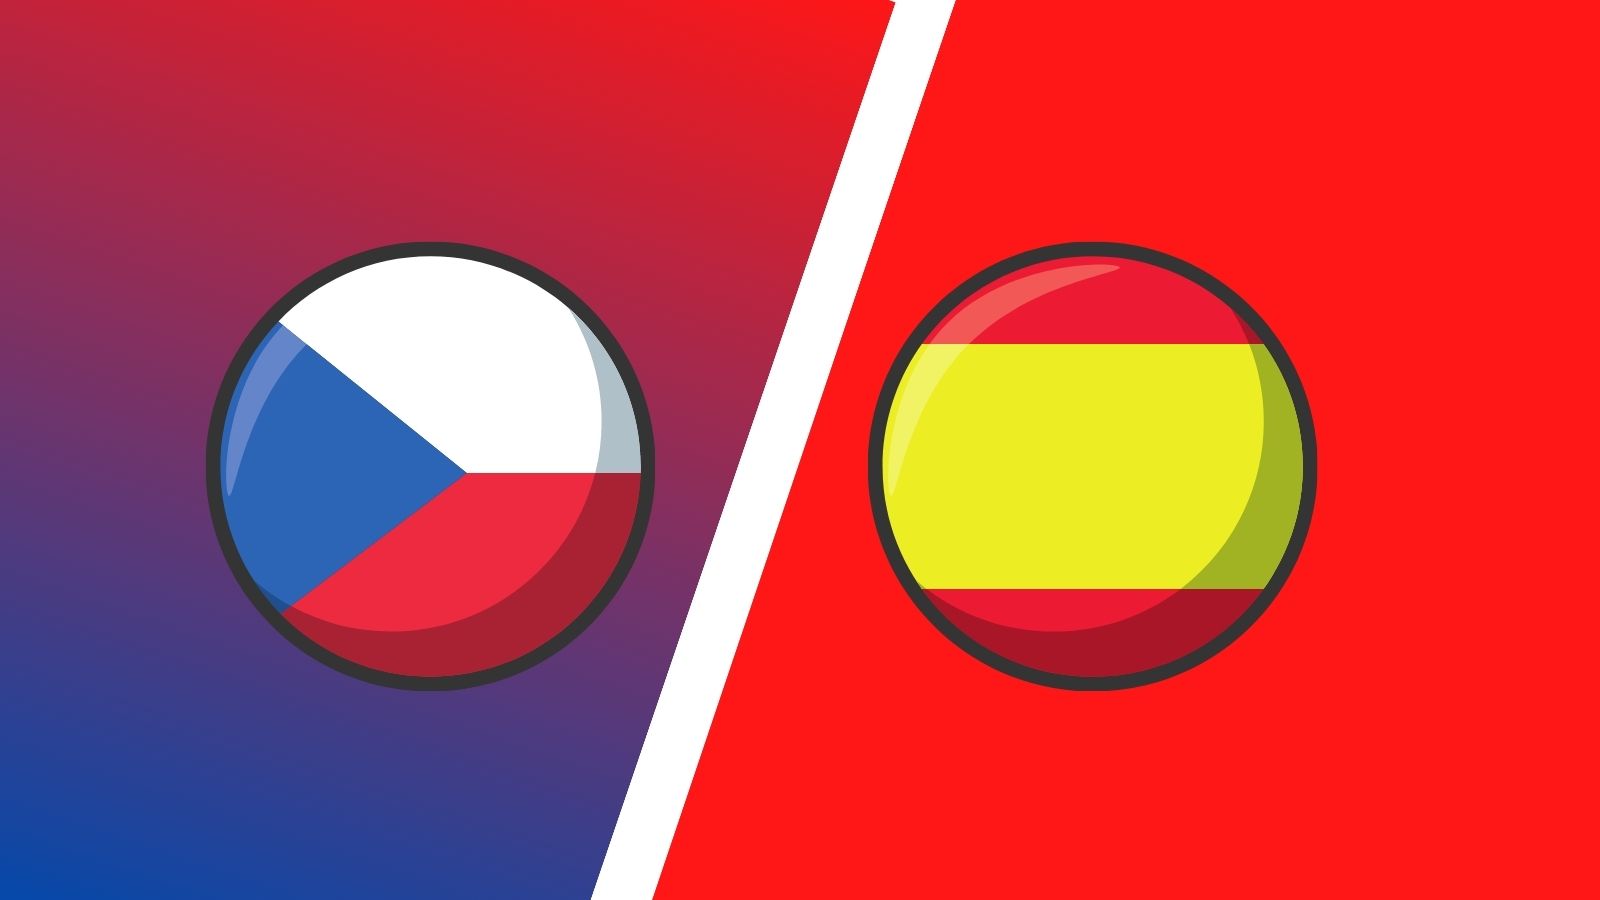 Czech Republic vs Spain Predictions & Match Preview